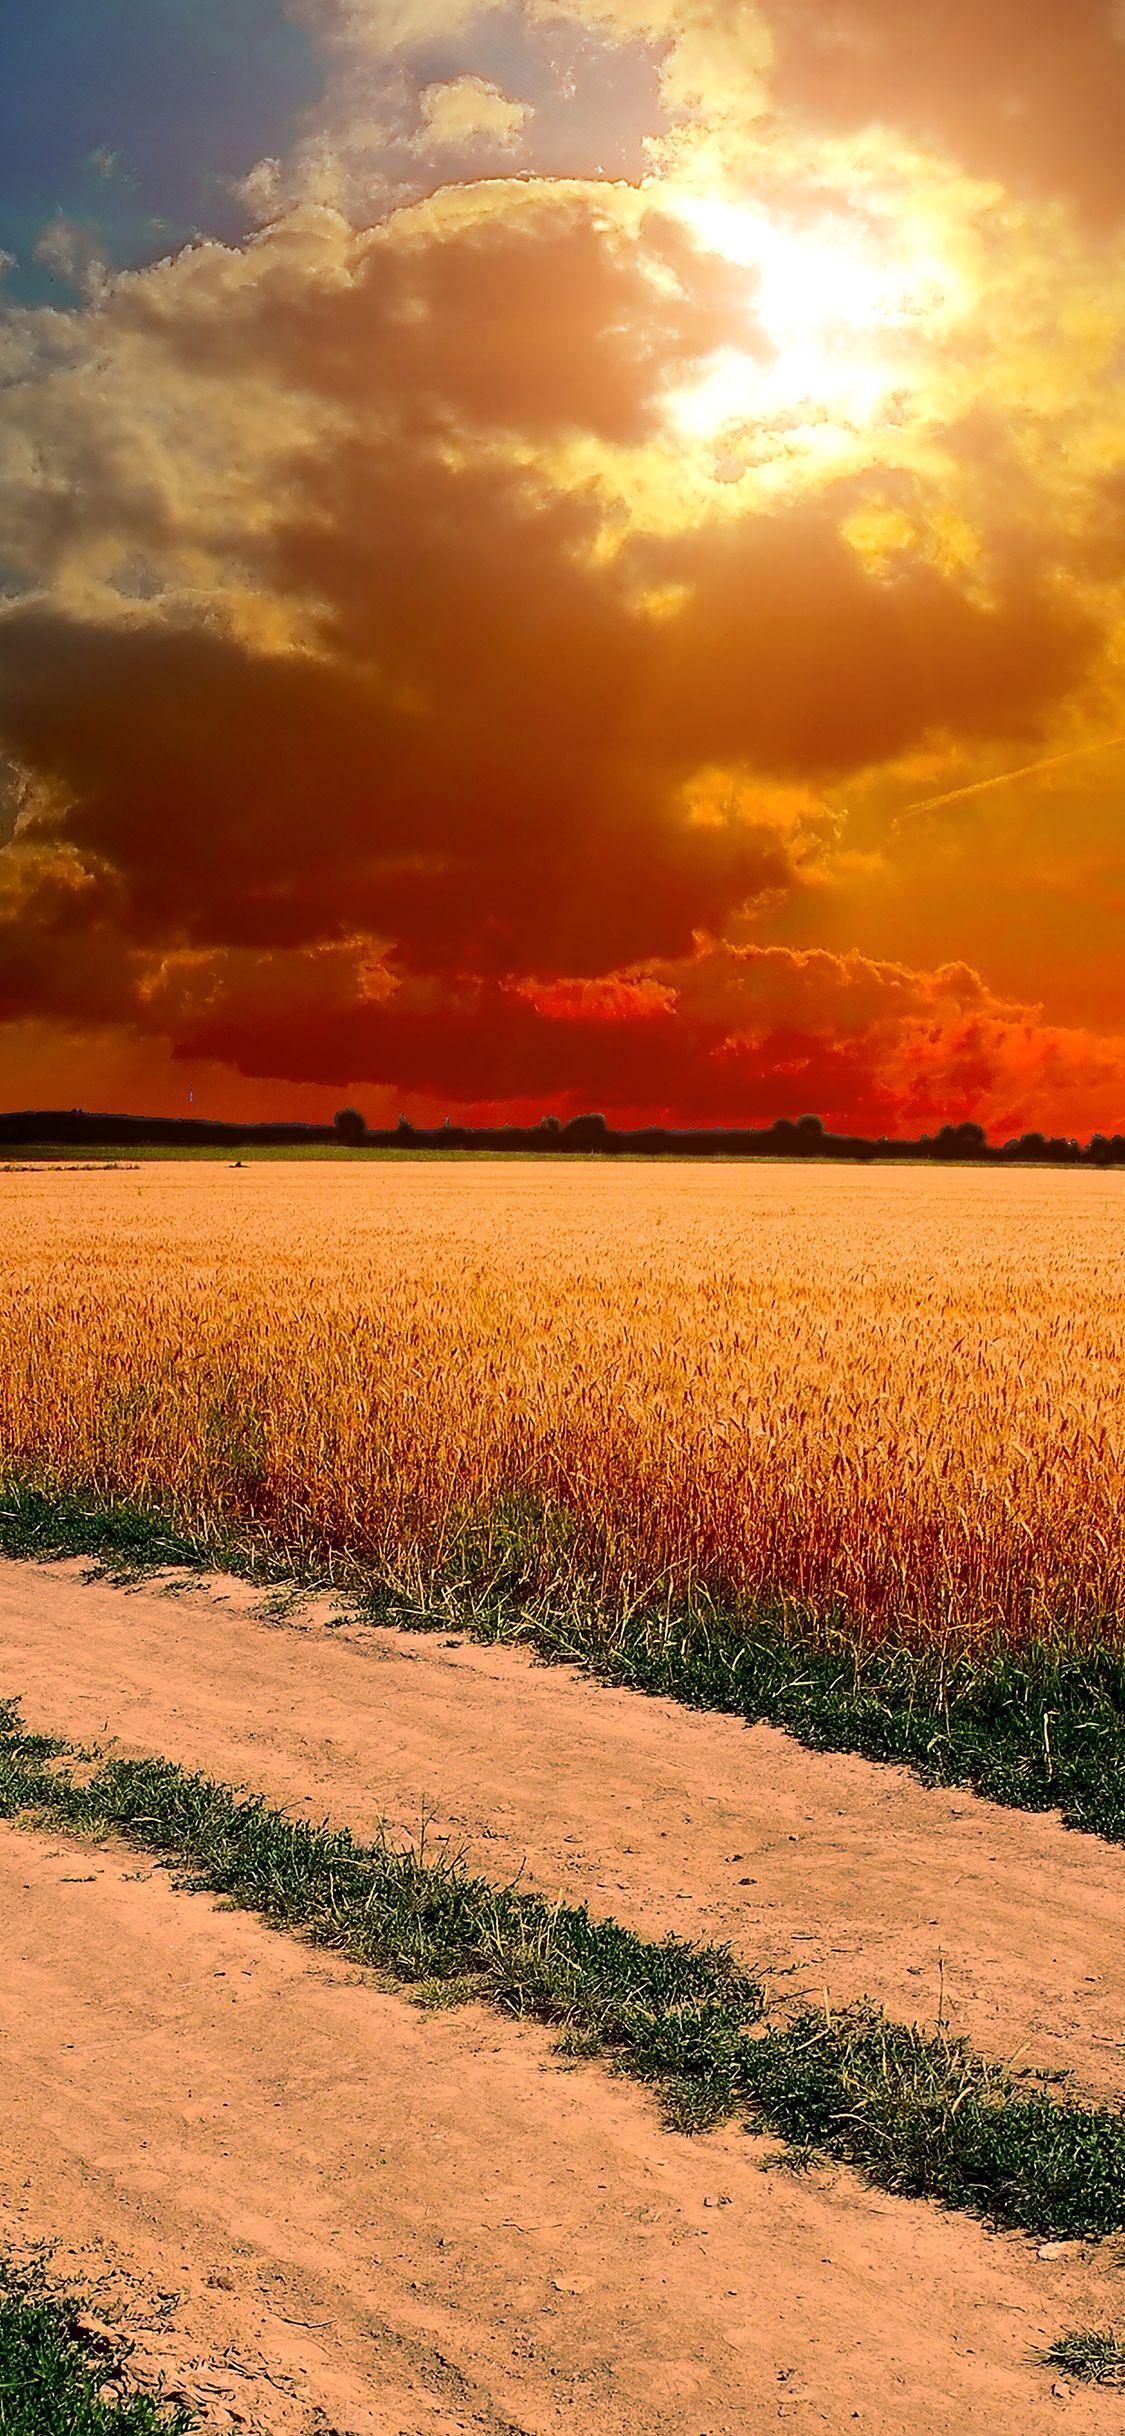 A dirt road through a field of wheat at sunset - Farm